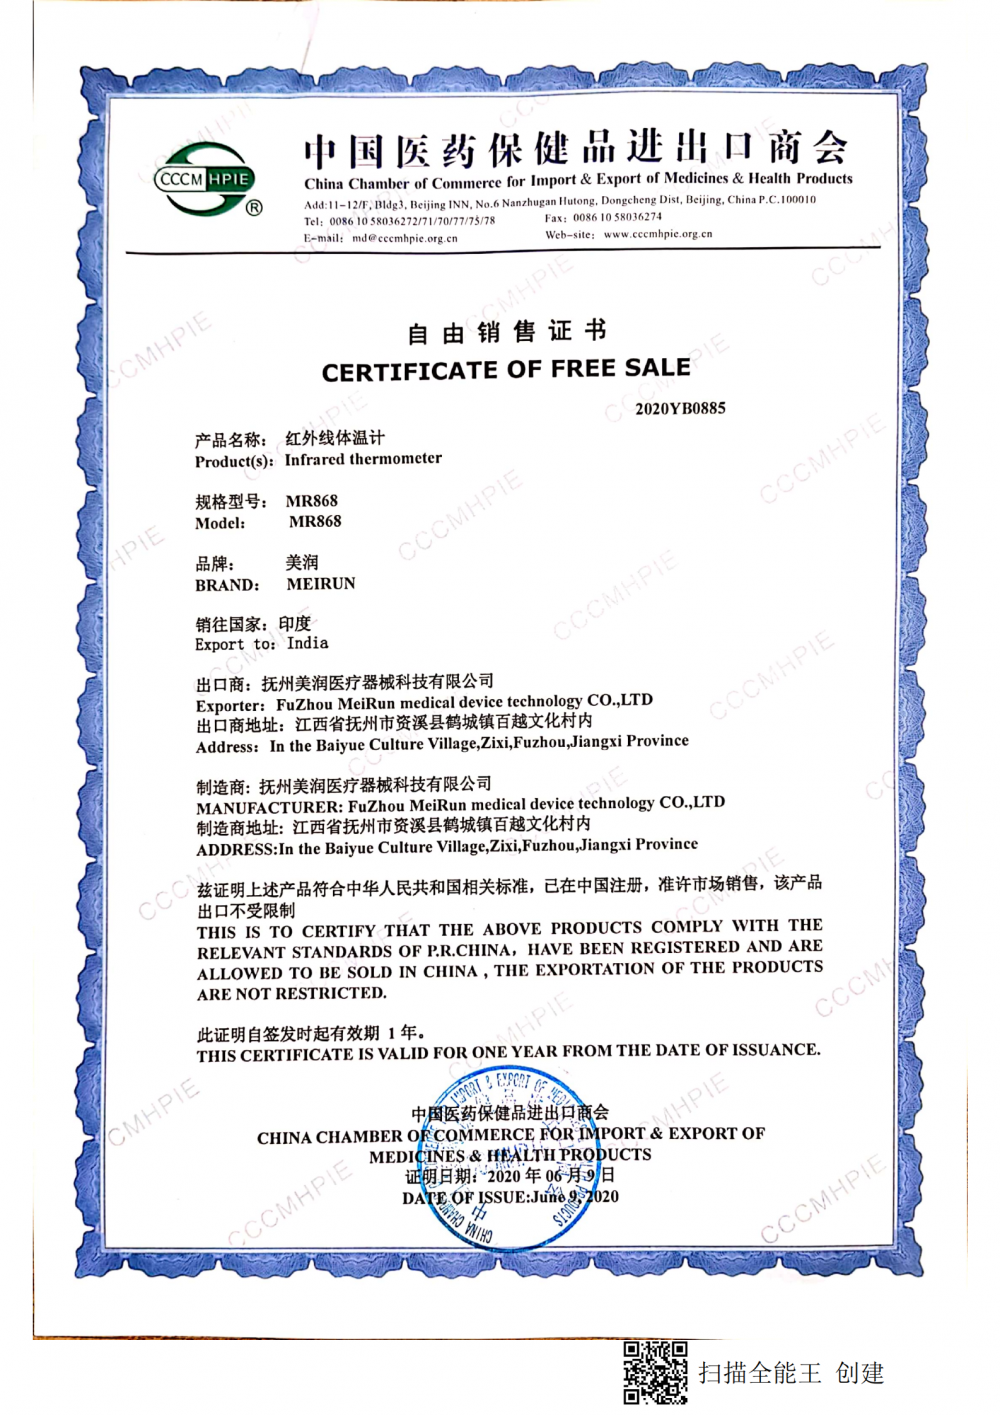 Free sale certificate - India